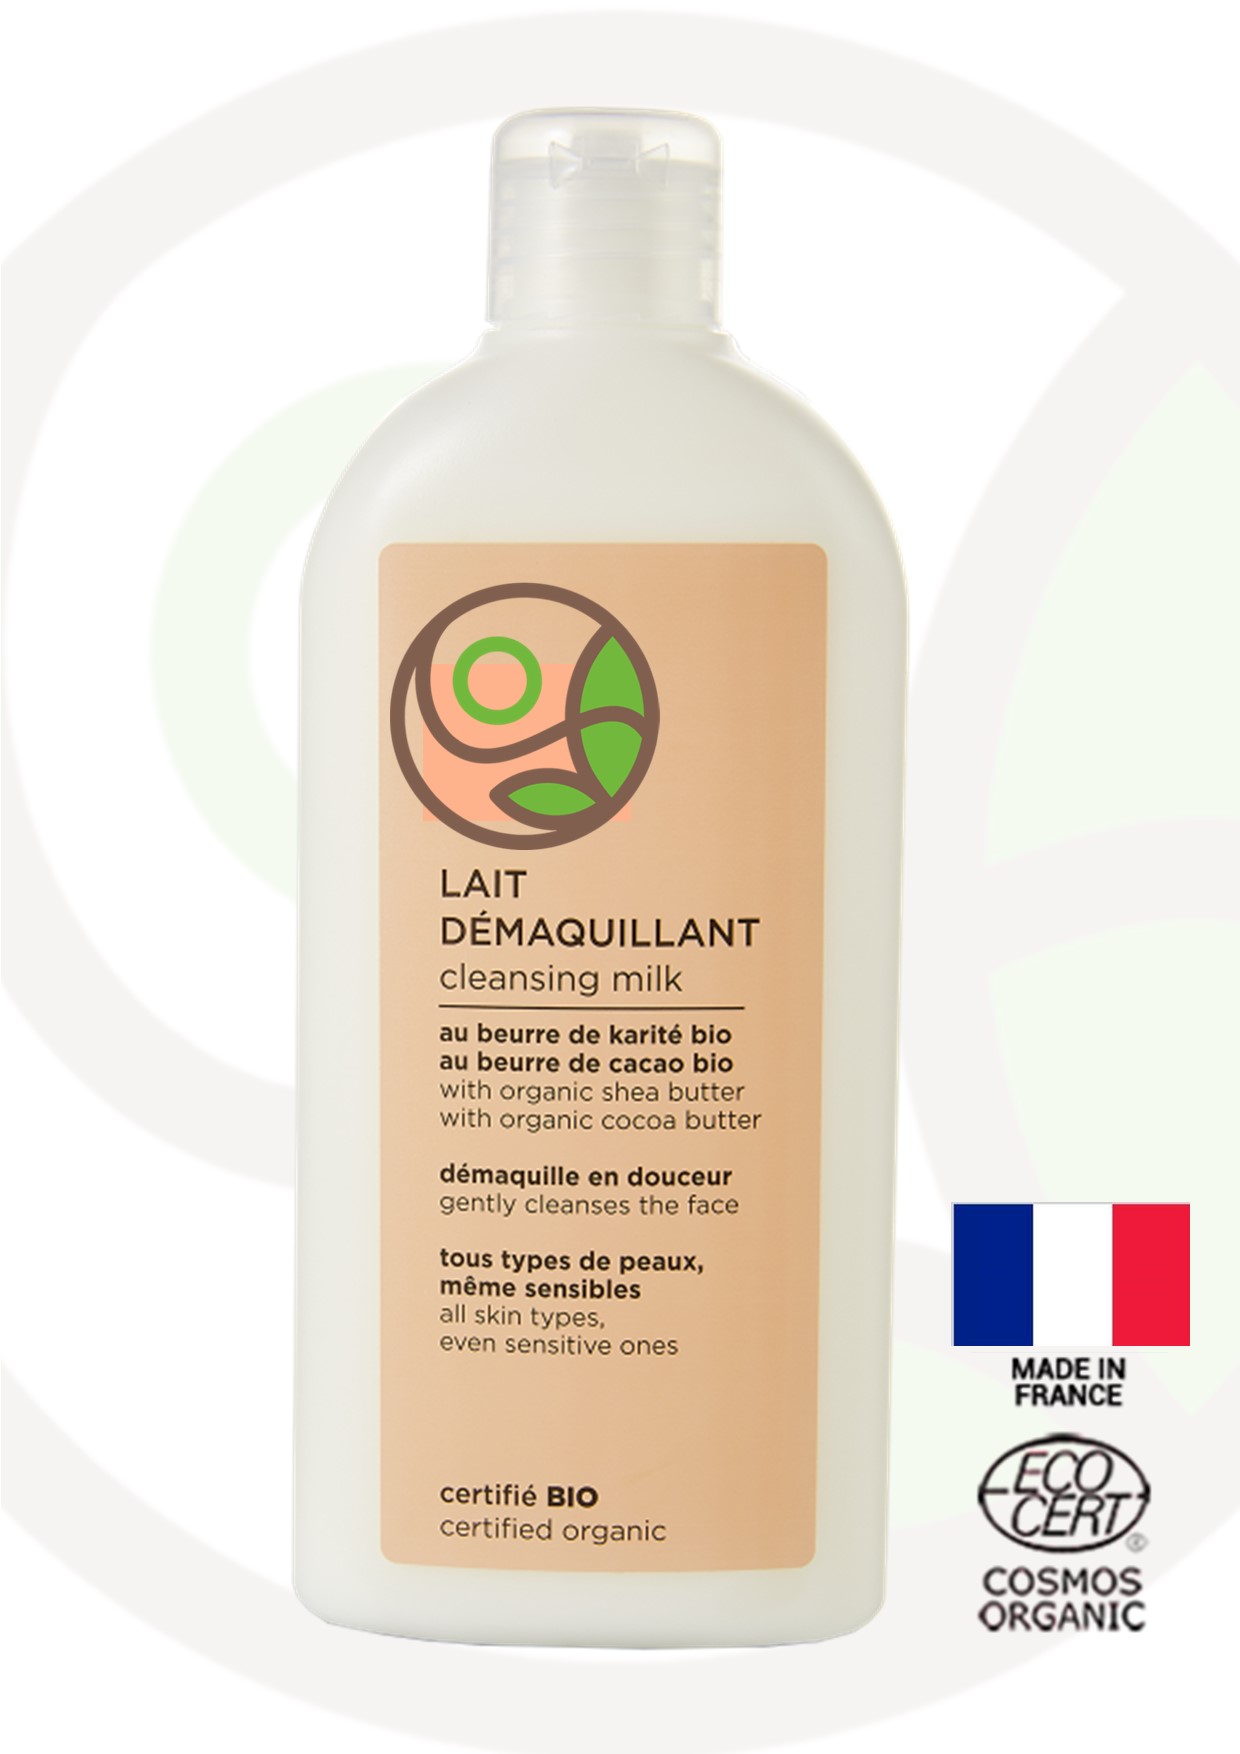 Featured image for “Latte detergente 250ml - certificato bio”